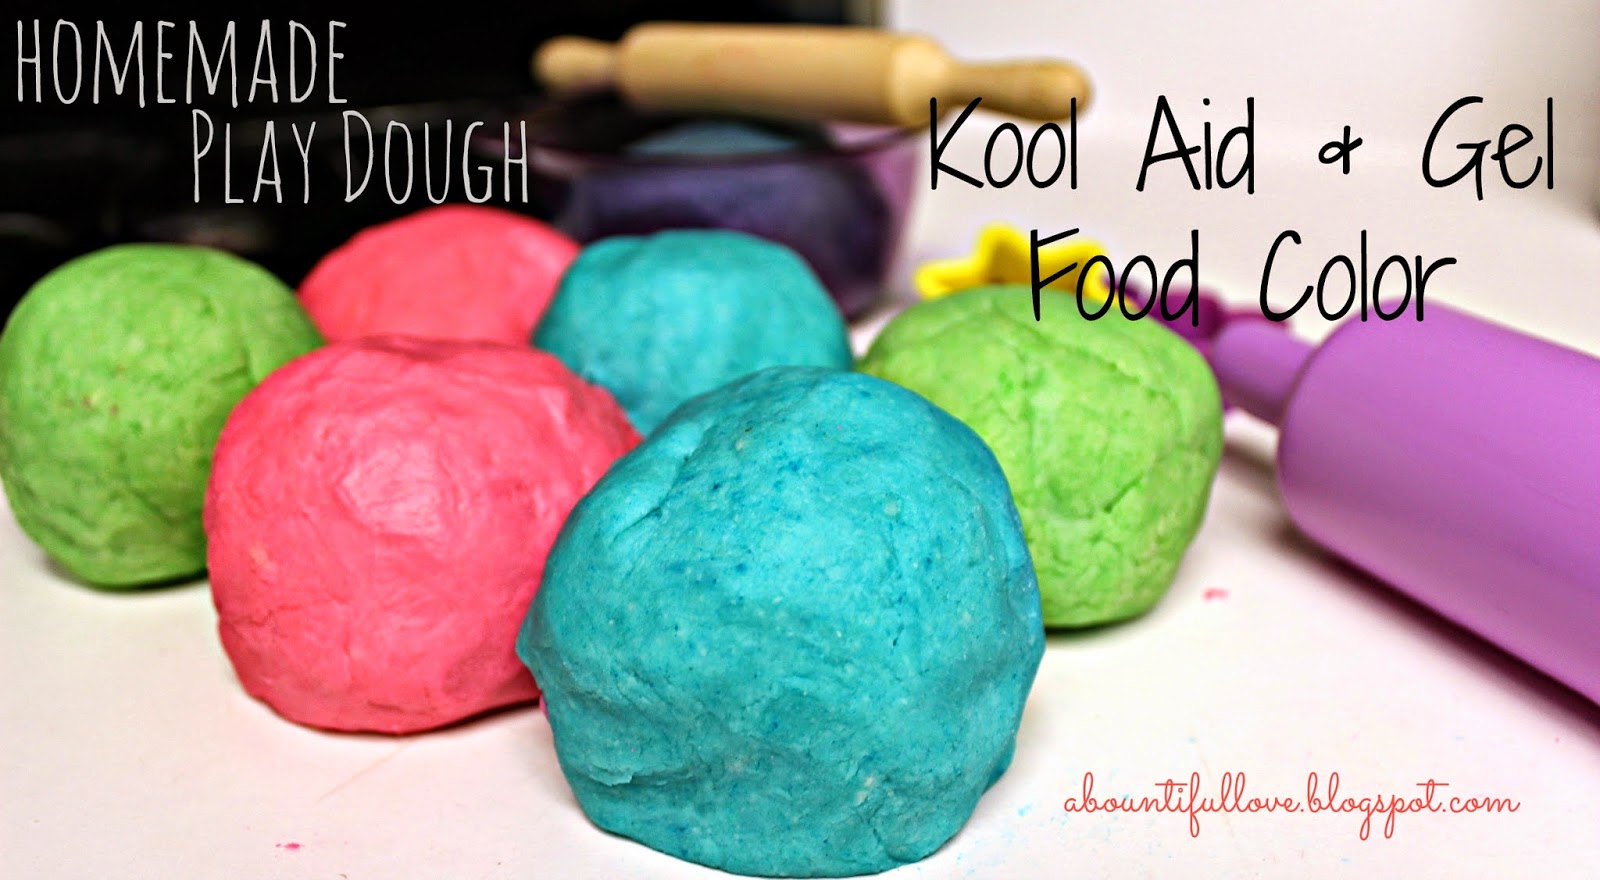 Kool-Aid Play Dough Recipe 